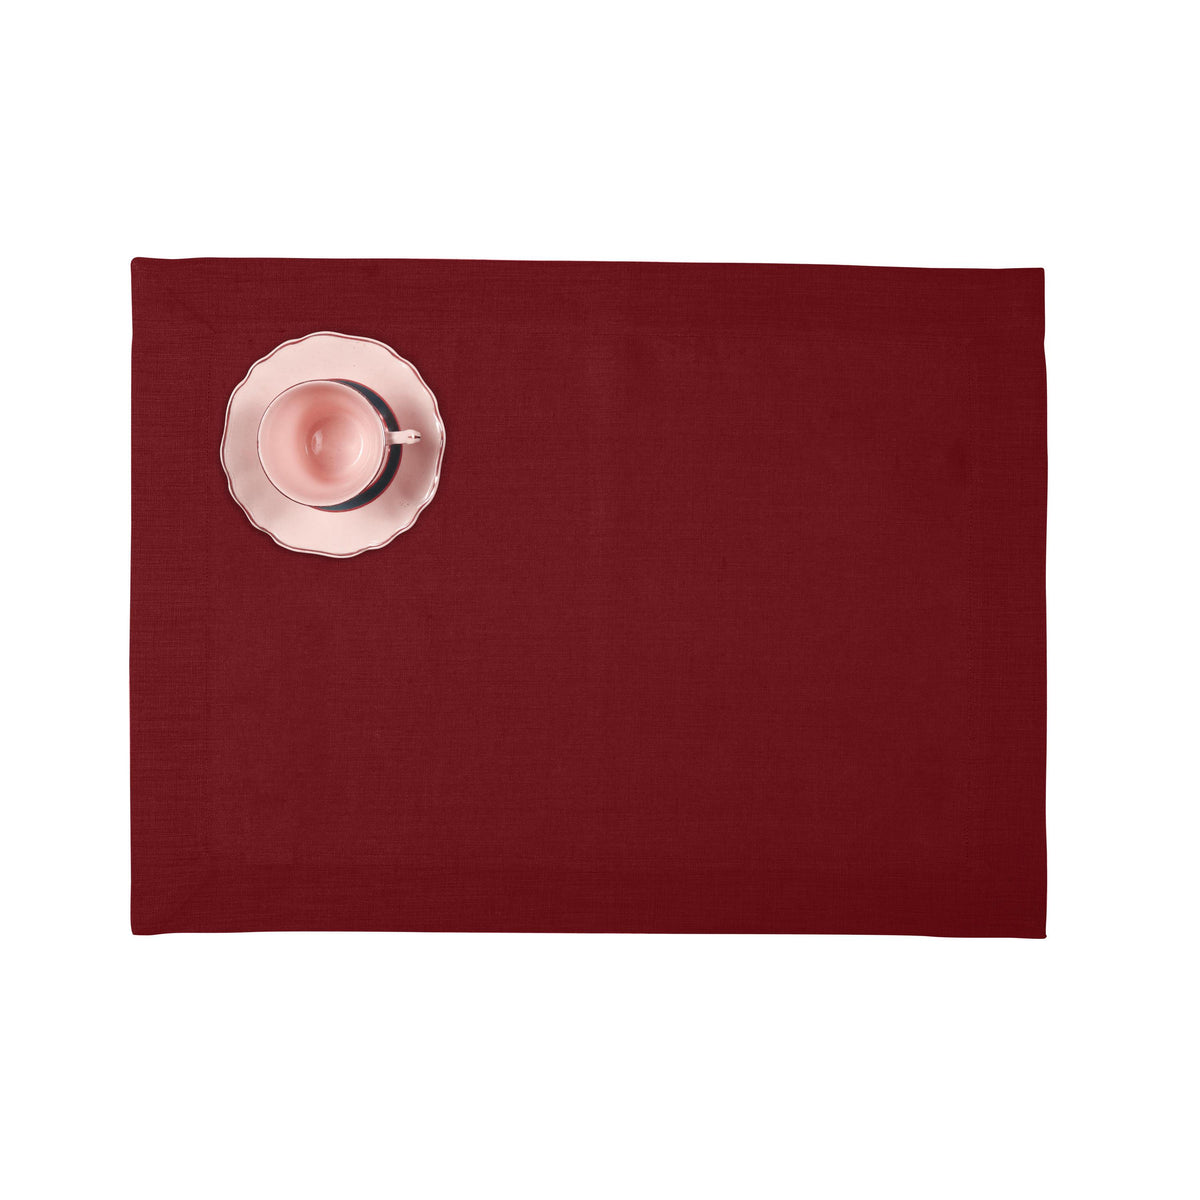 Dark Red Linen Placemats 14 x 19 Inch Set of 4 - Hemmed